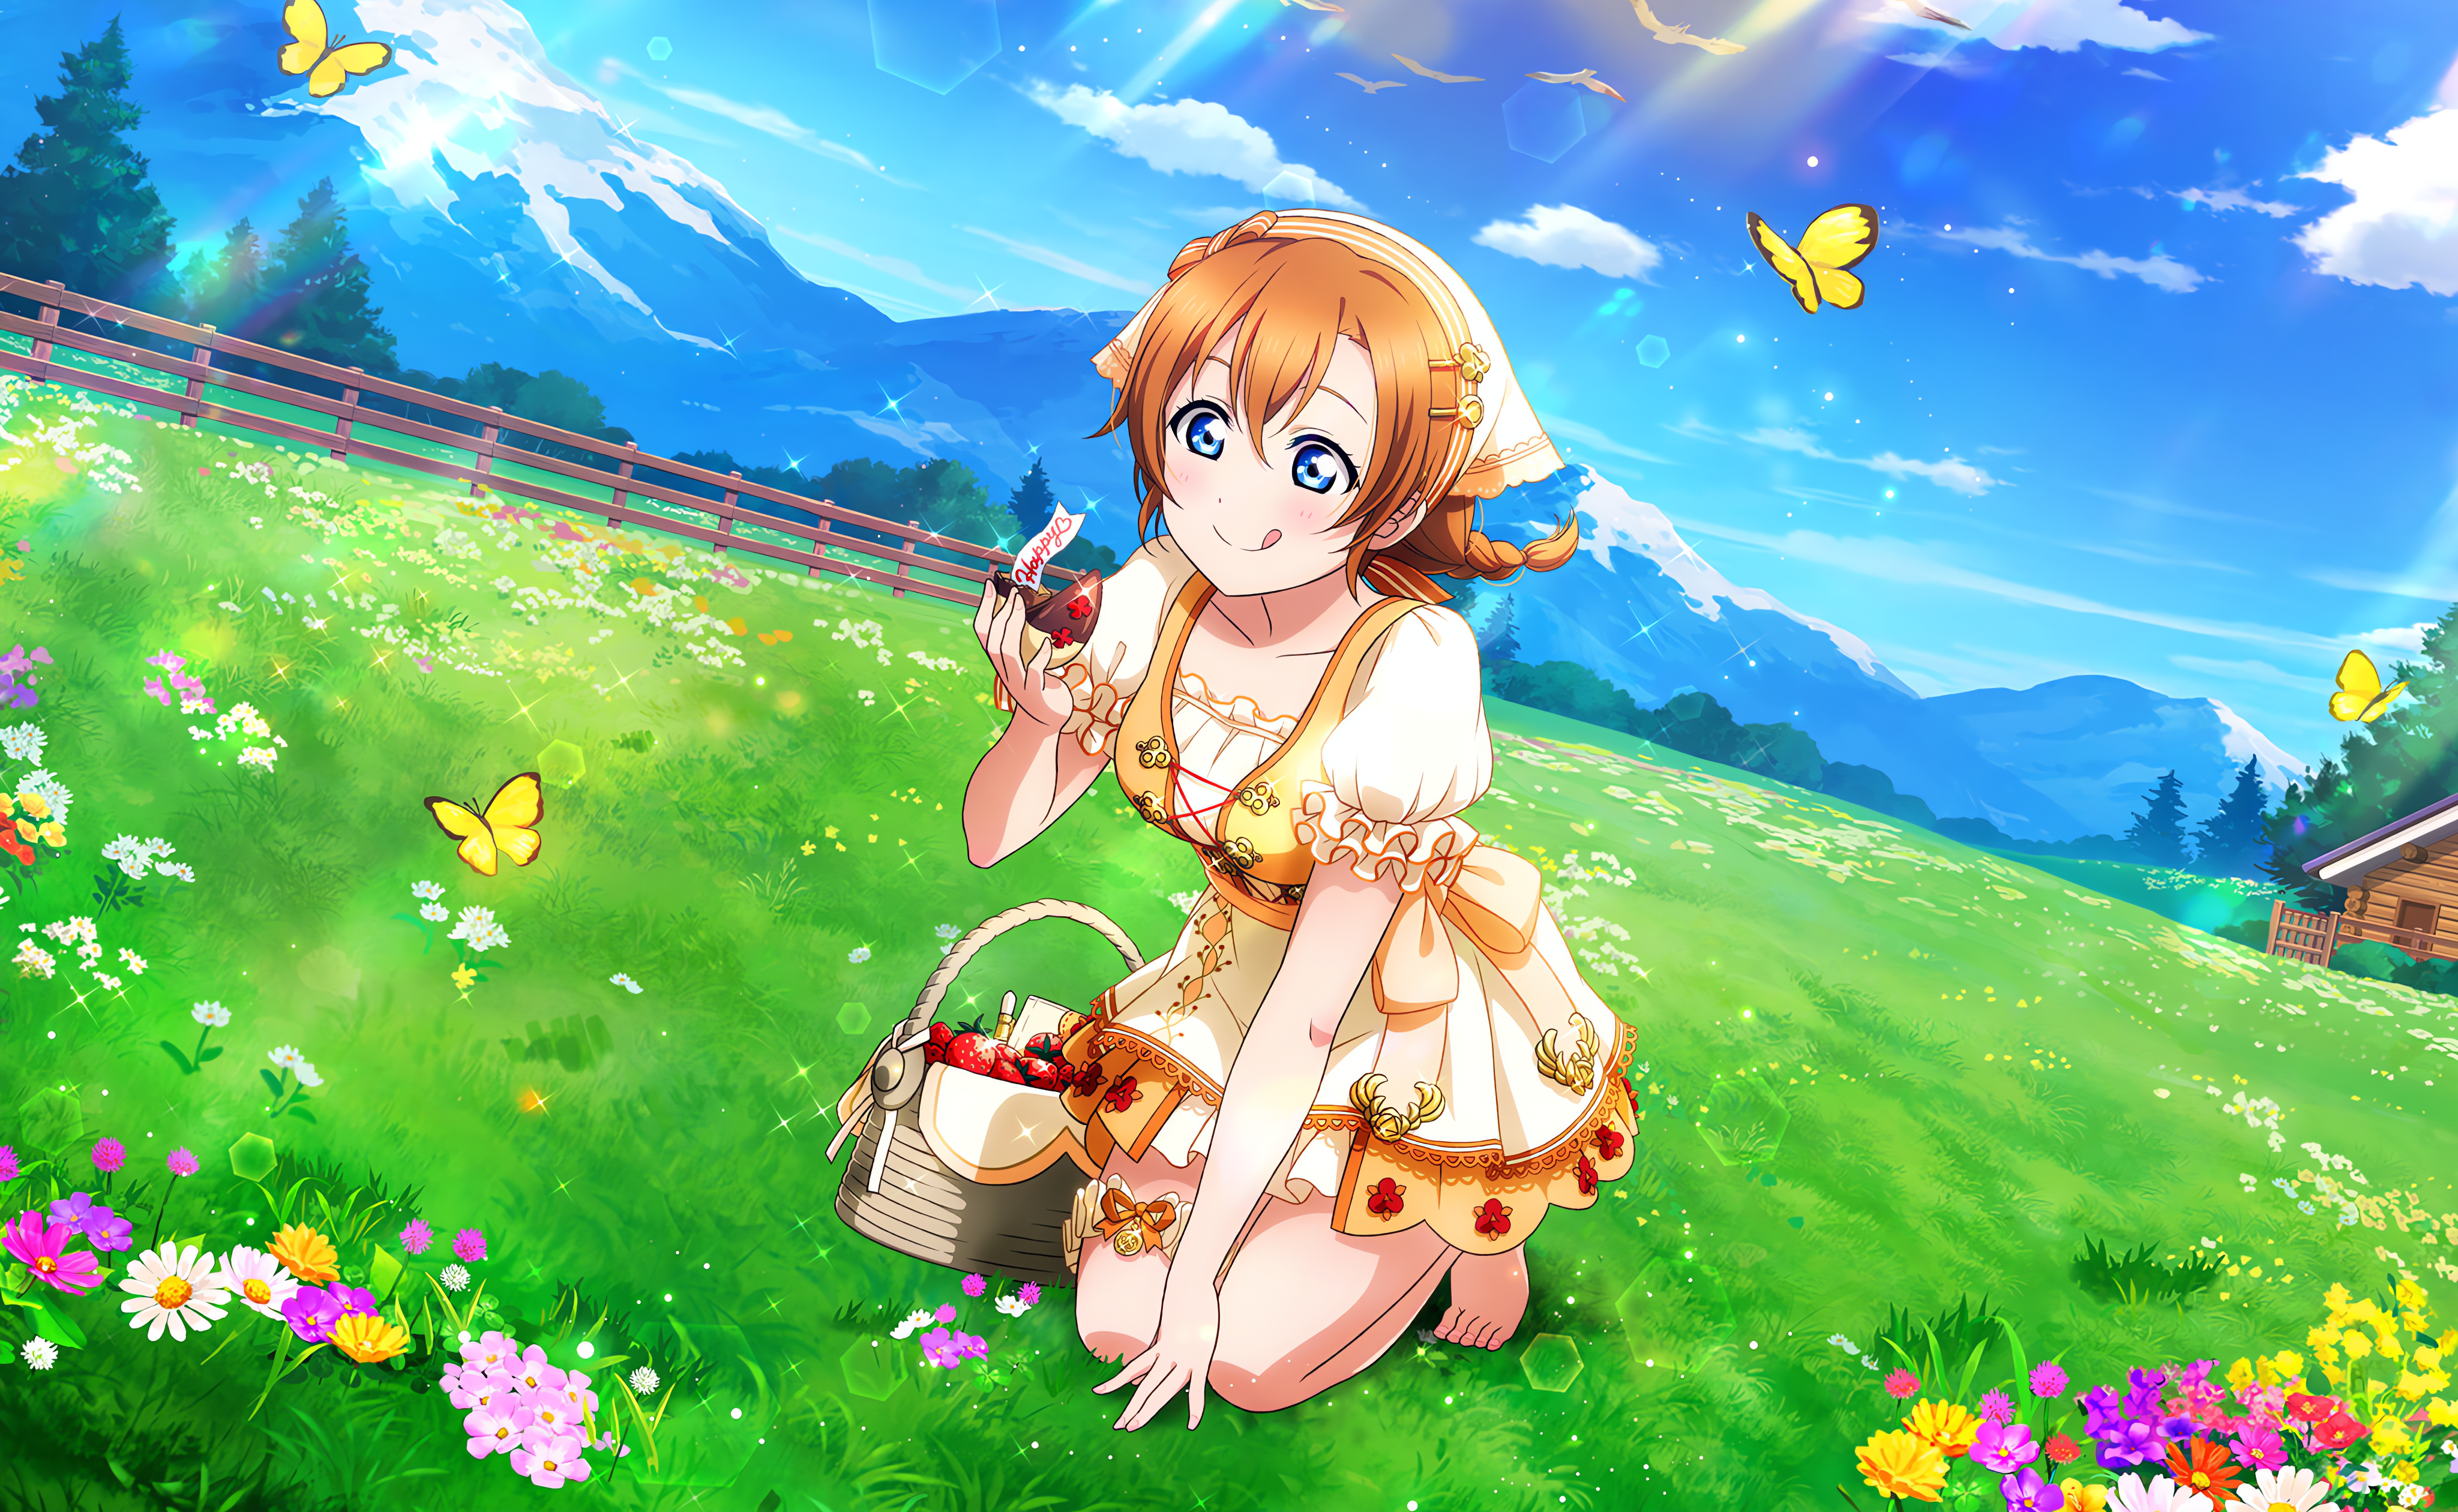 Kousaka Honoka Love Live Anime Anime Girls Smiling Tongue Out Grass Flowers Sunlight Sky Clouds Moun 4096x2520